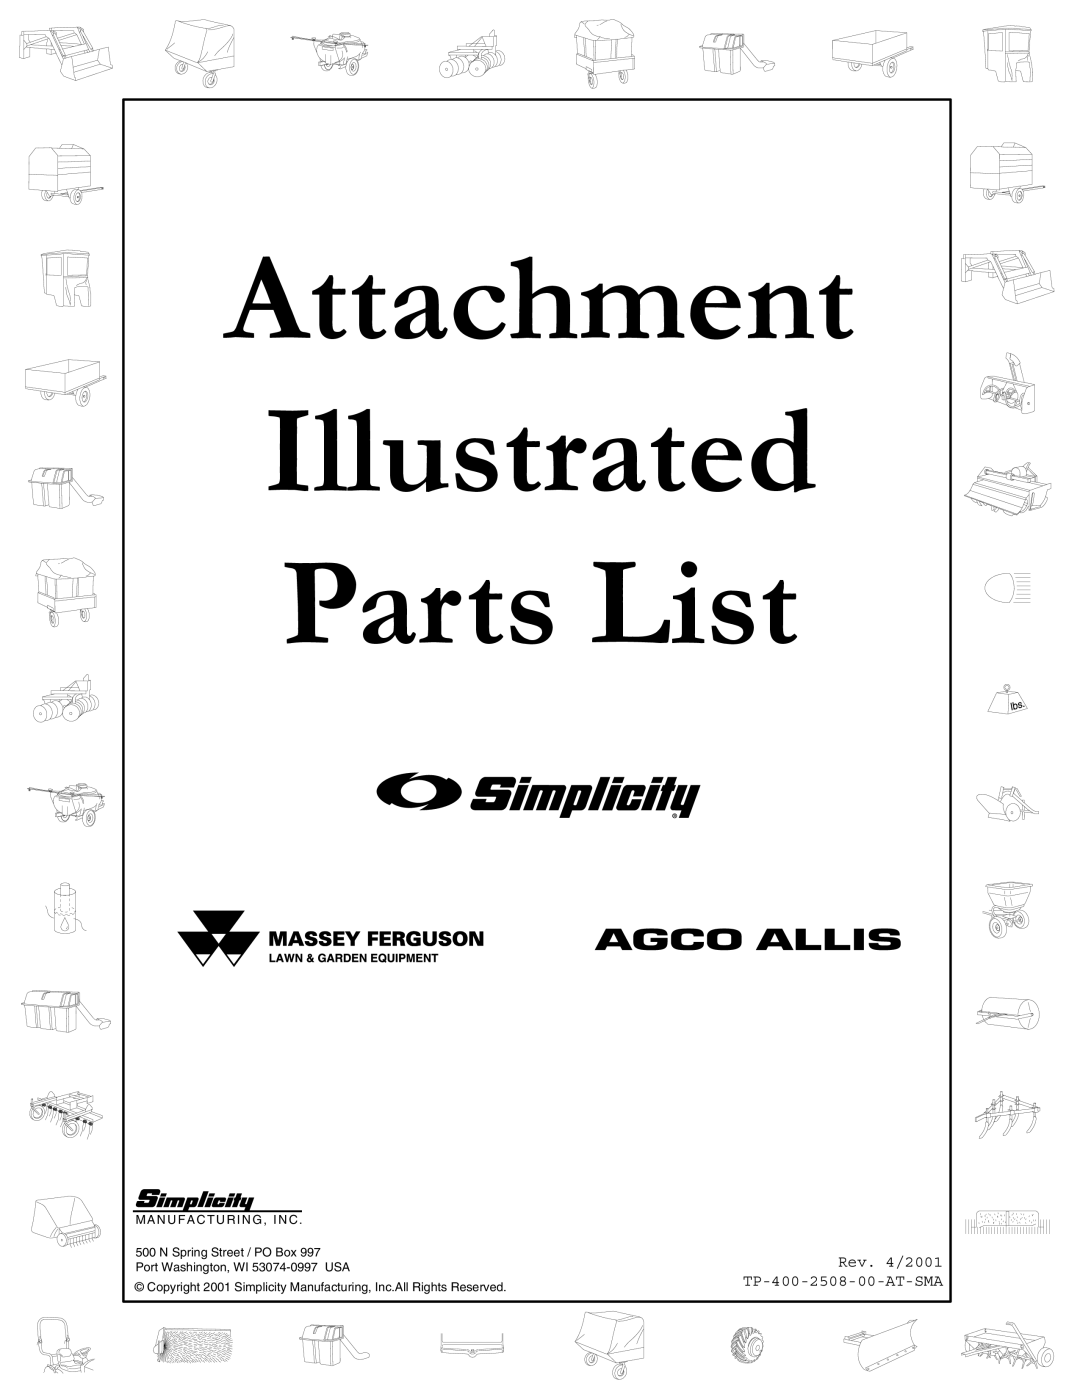 Snapper manual Attachment Illustrated Parts List, Rev. 4/2001 TP-400-2508-00-AT-SMA, Port Washington, WI 53074-0997USA 